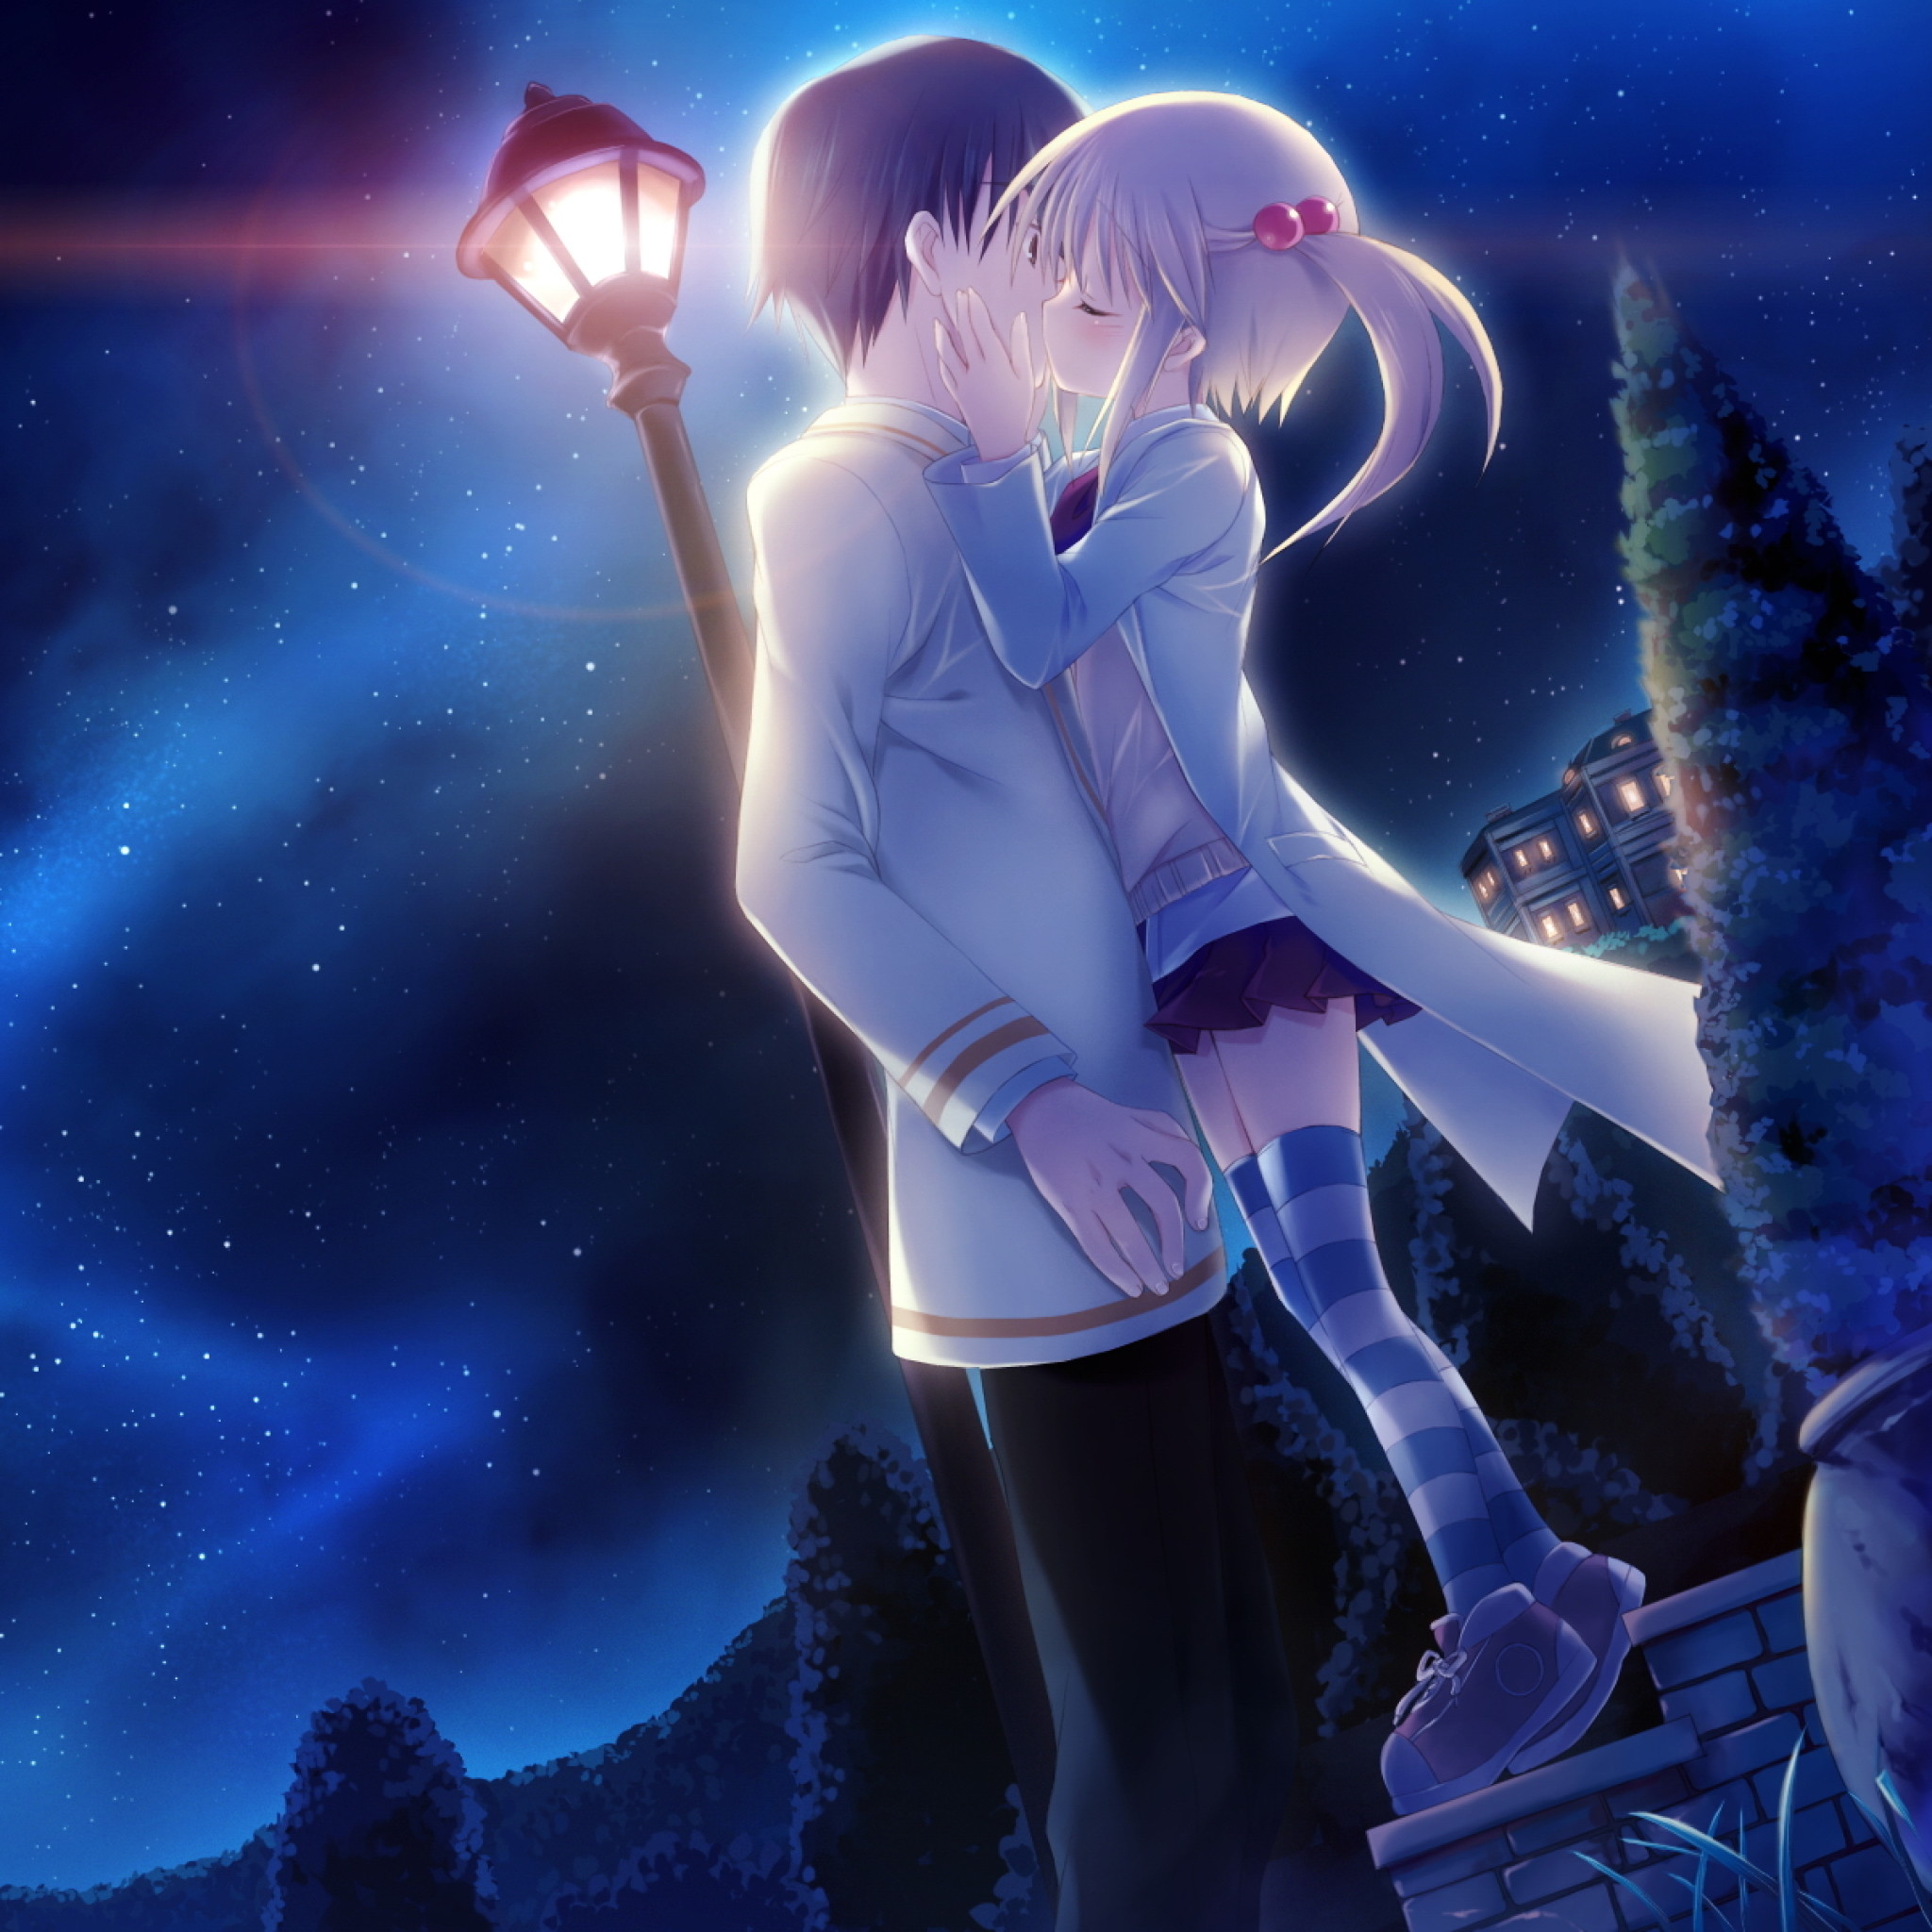 wallpaper night love,light,sky,anime,romance,interaction